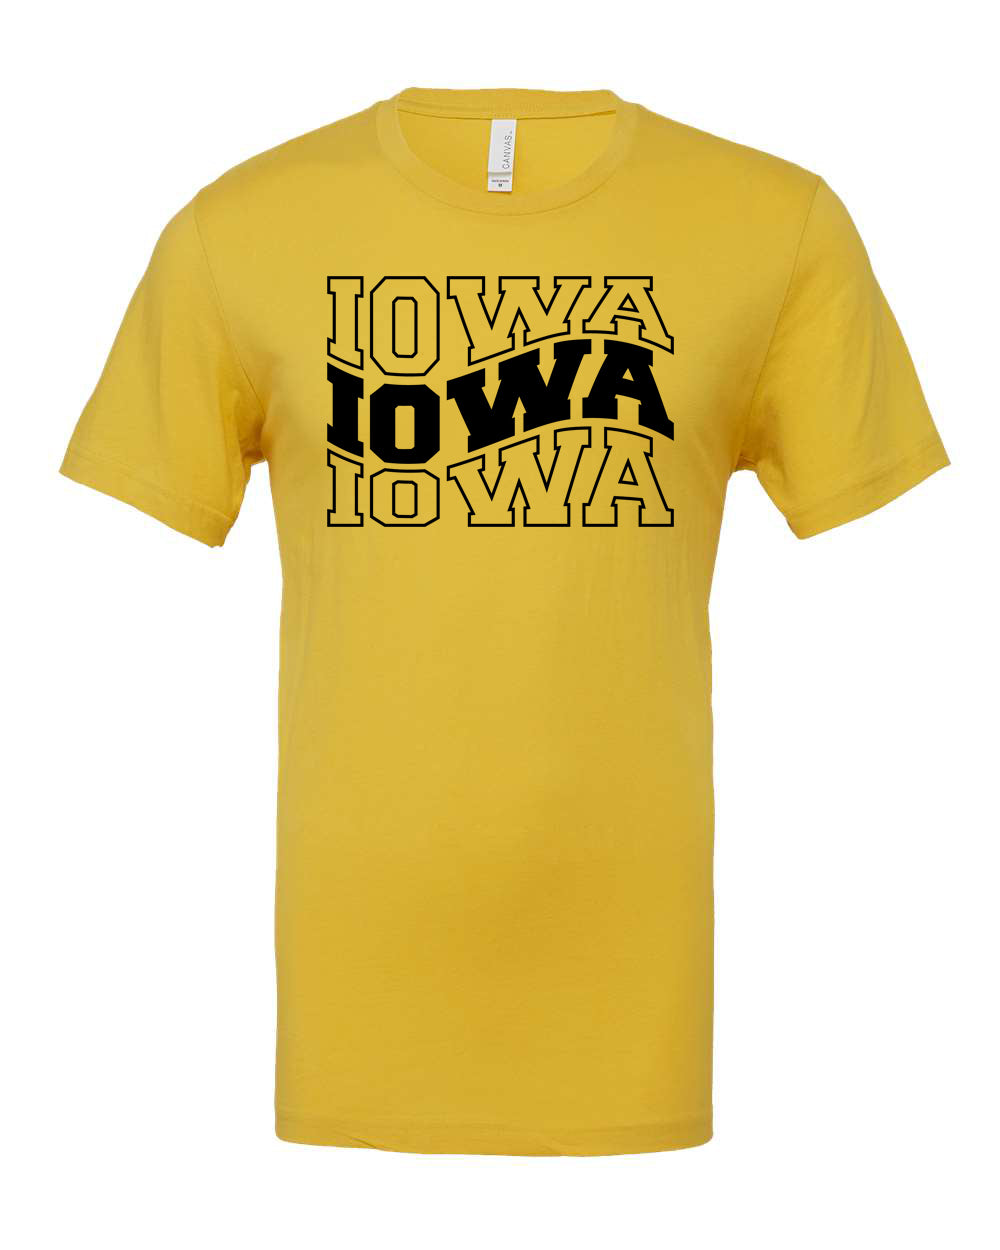 Iowa Wave